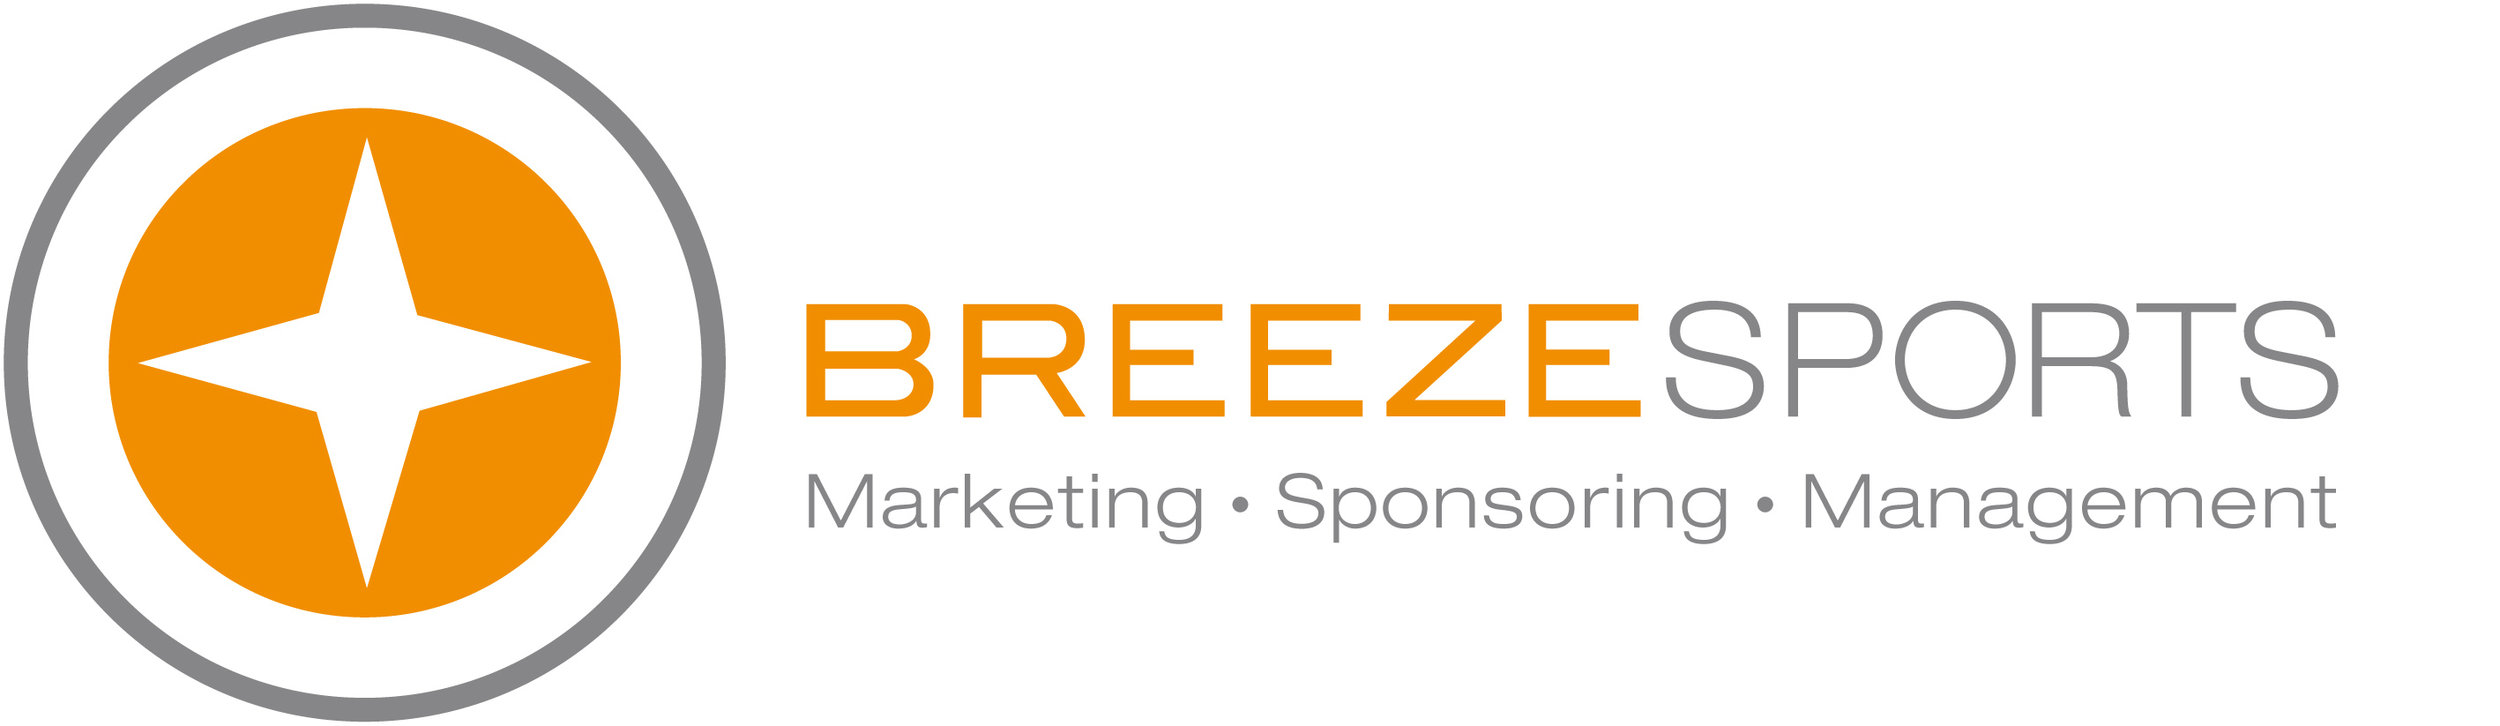 BREEZE Sports Logo in 300dpi mit Unterzeile.jpg